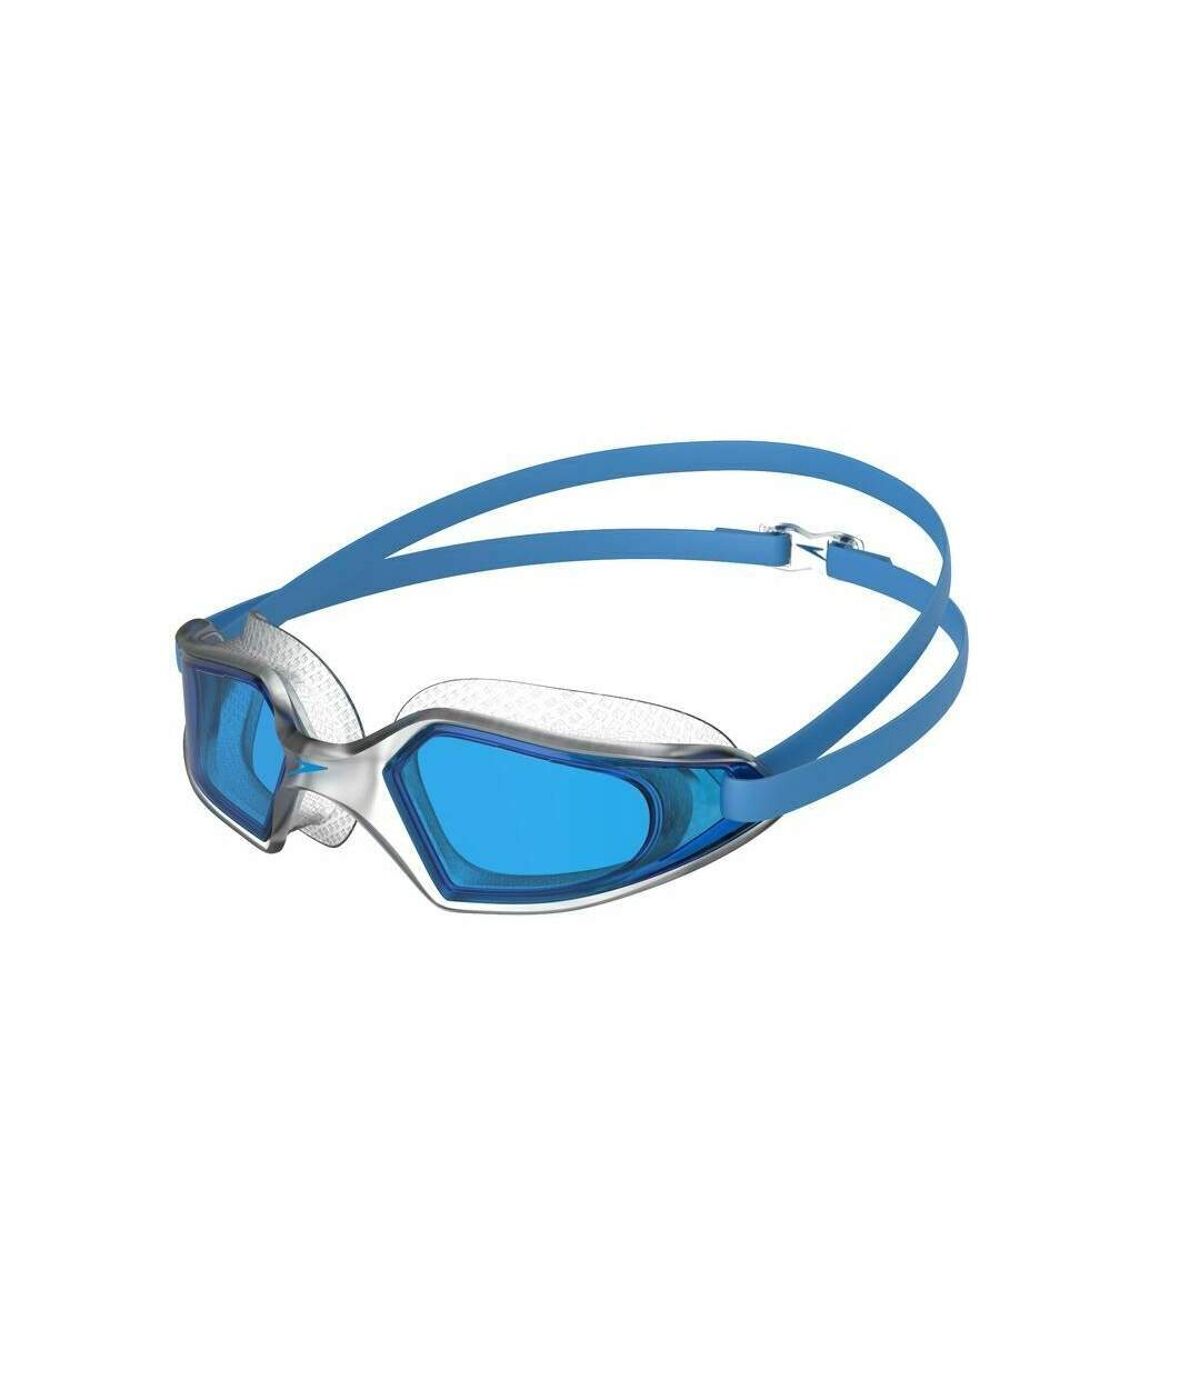 Speedo - Lunettes de natation HYDROPULSE - Unisexe (Transparent/bleu) - UTRD1234